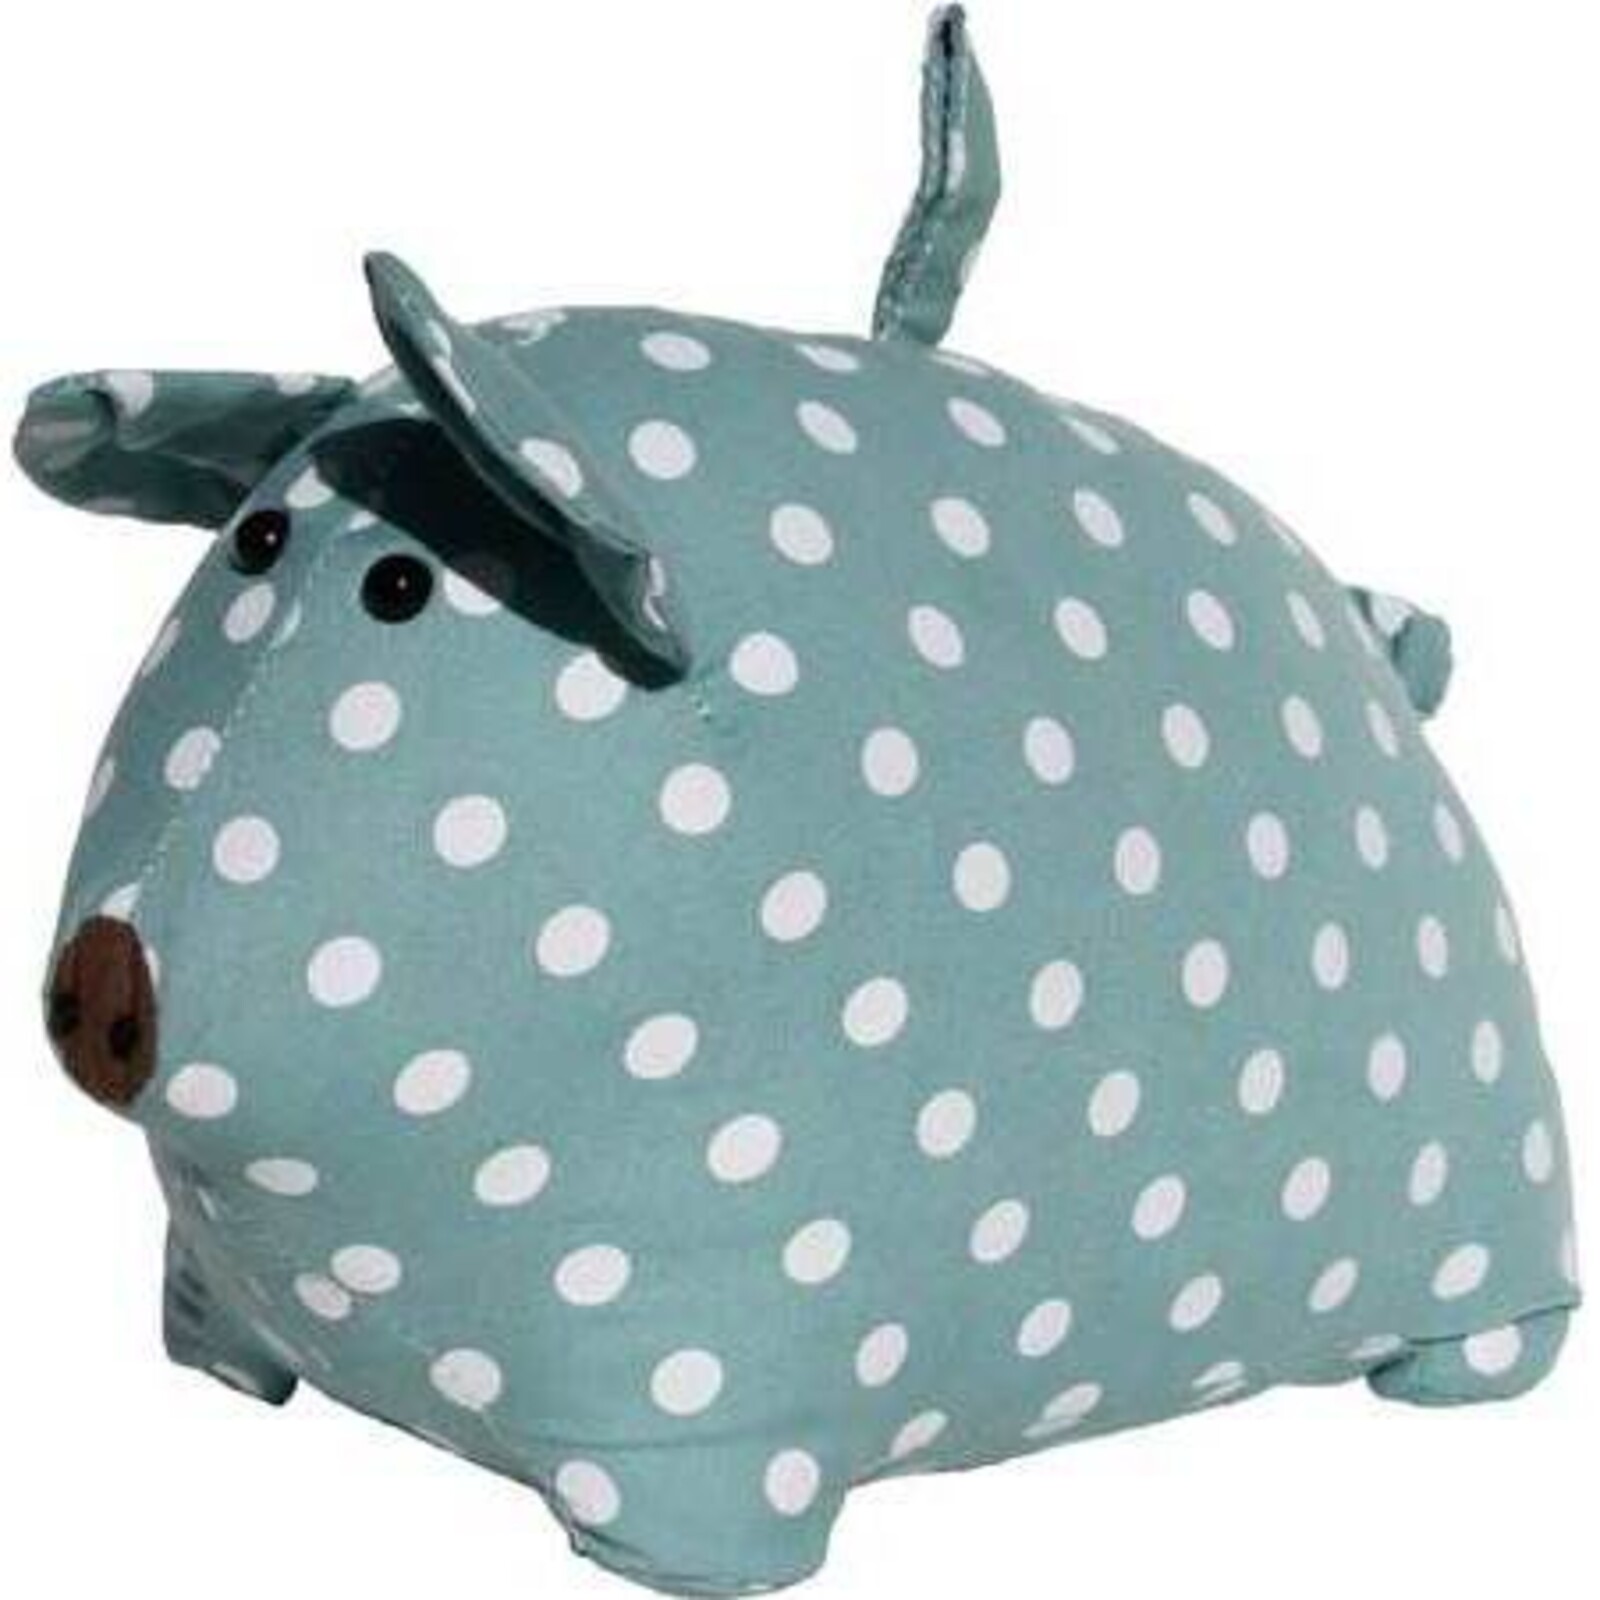 Doorstop/Cushion - Dotty Pig